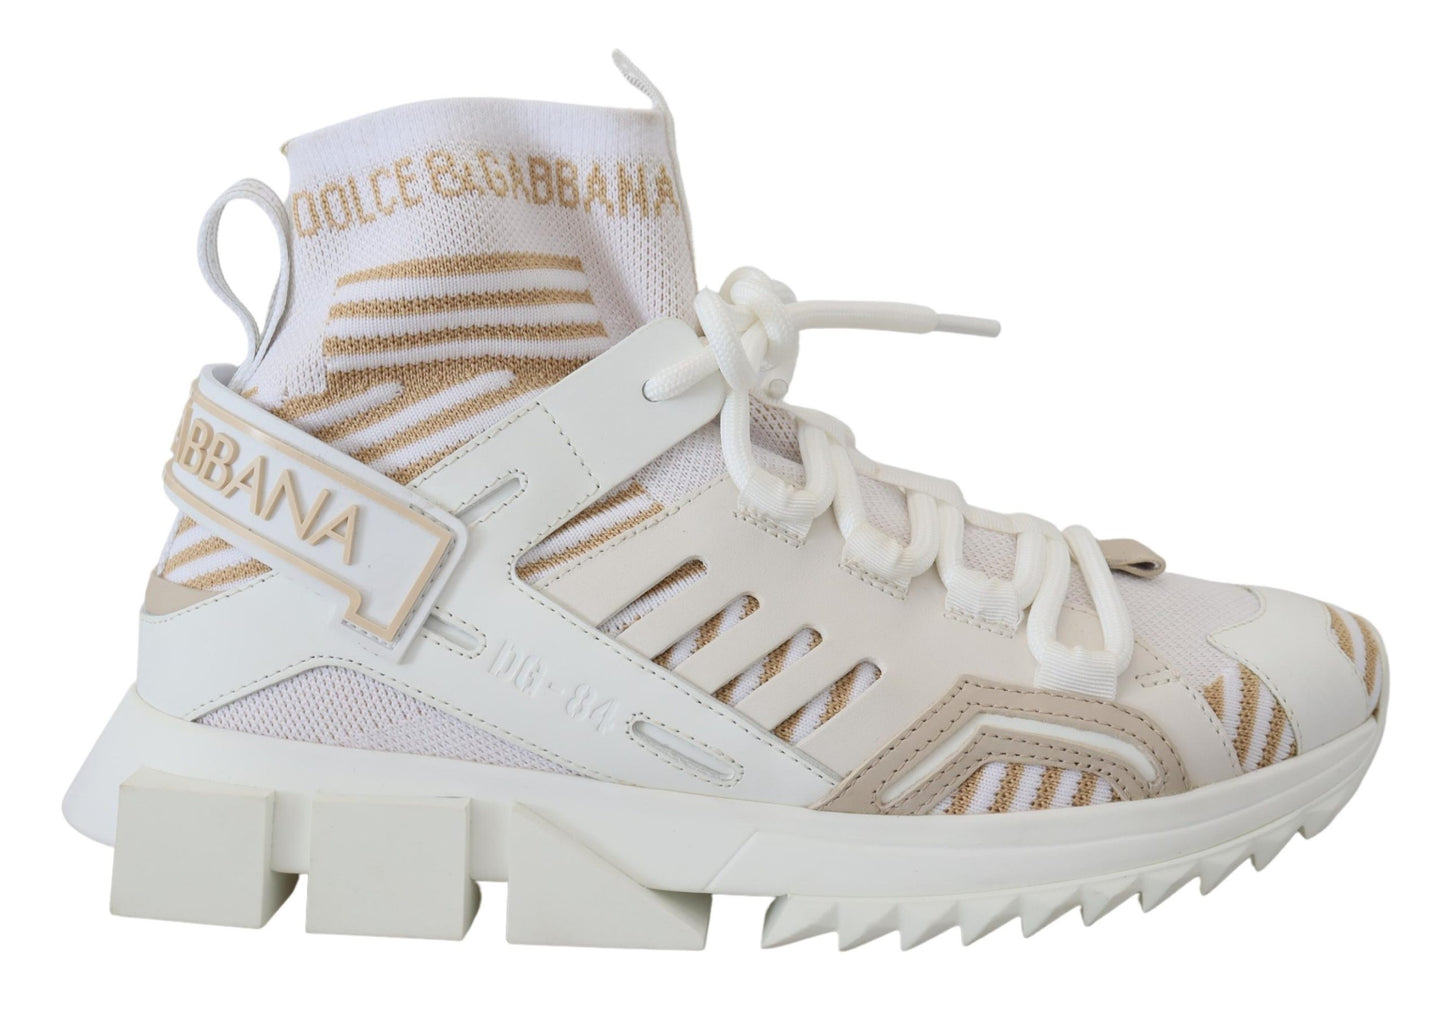 Dolce & Gabbana White Beige Sorrento Sneakers Scarpe